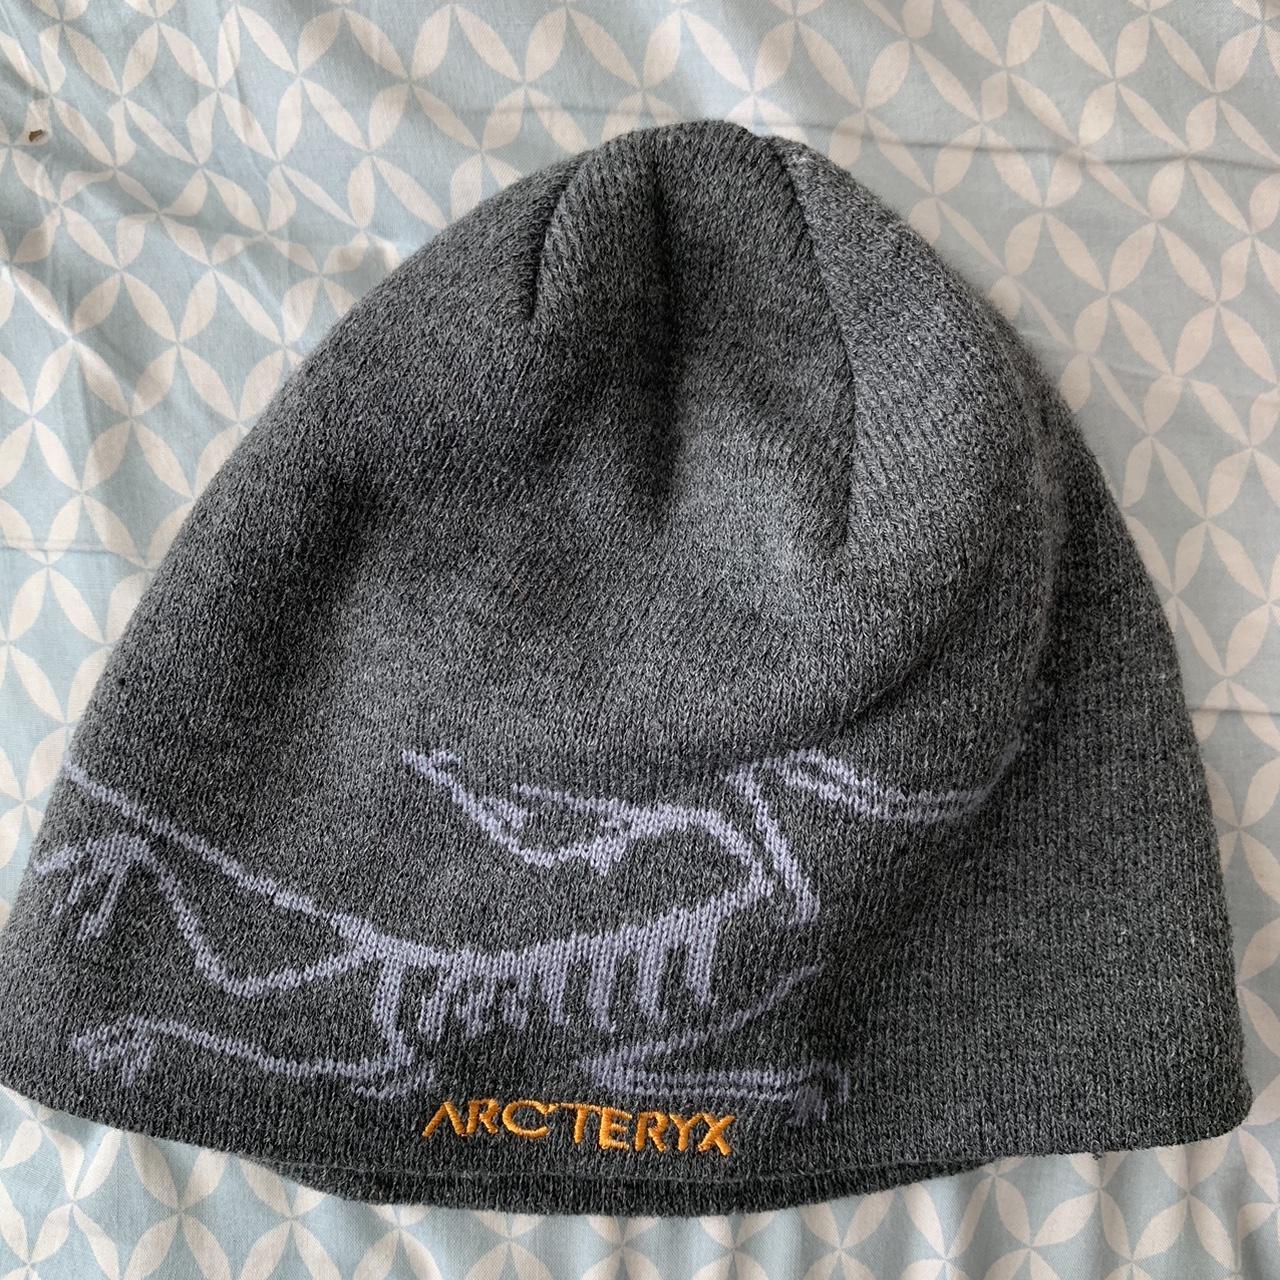 Arc'teryx Men's Hat | Depop